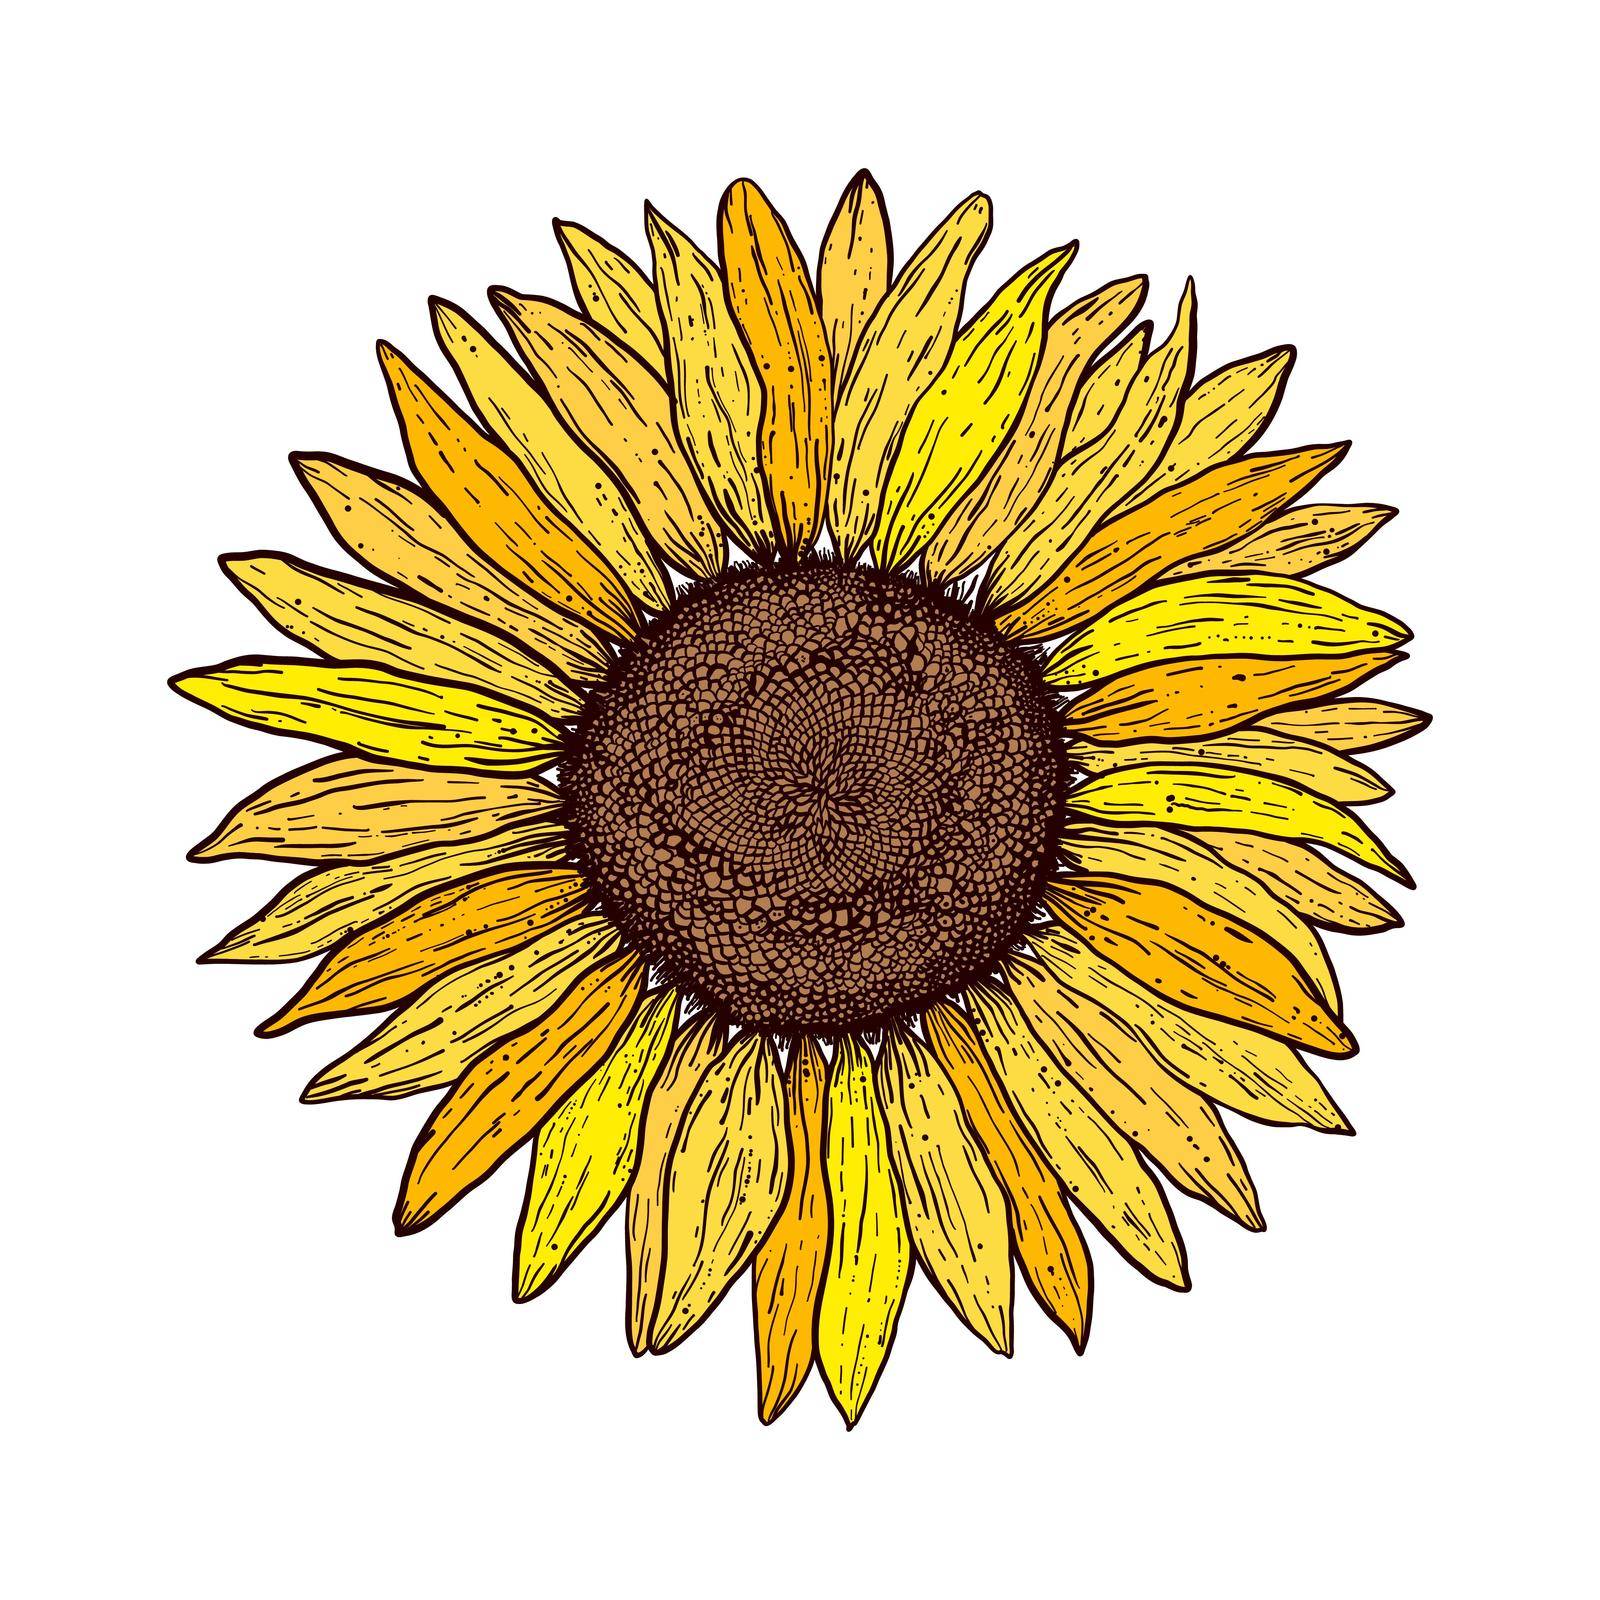 Sunflower in vintage style by kiyanochka